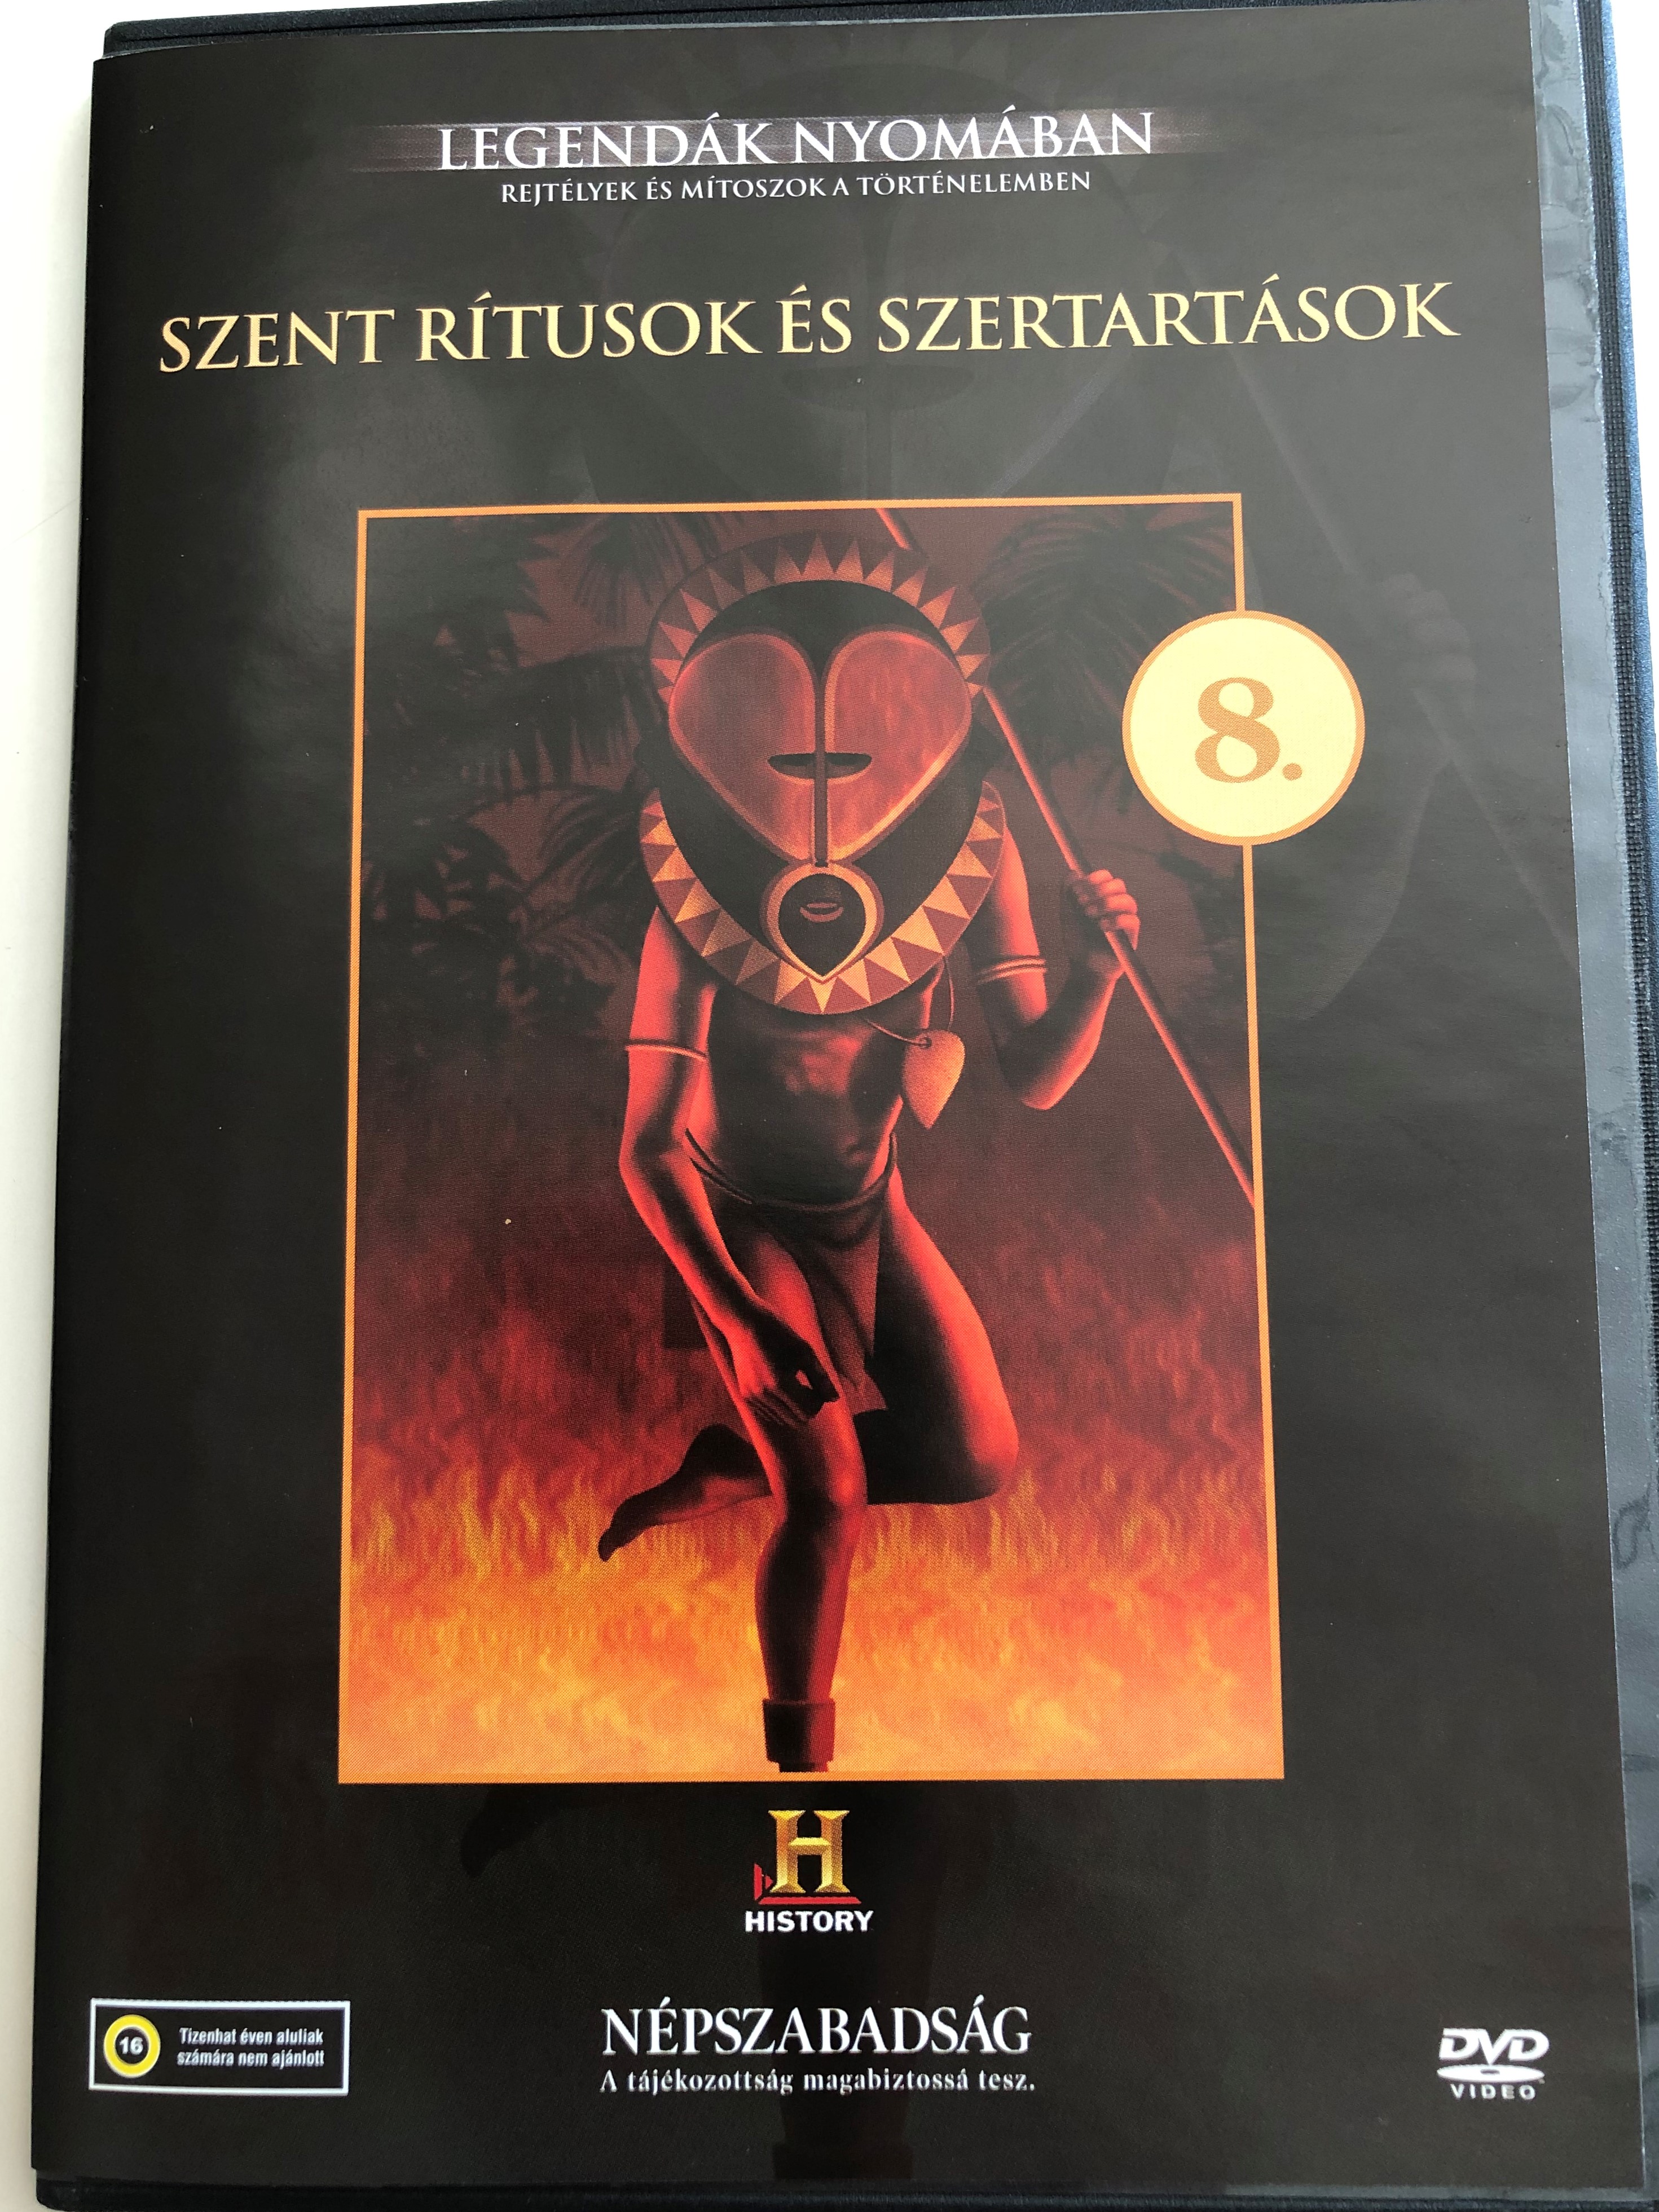 ancient-mysteries-vol-8.-sacred-rites-and-rituals-dvd-1996-legend-k-nyom-ban-szent-r-tusok-s-szertart-sok-proudced-by-william-kronick-1-.jpg